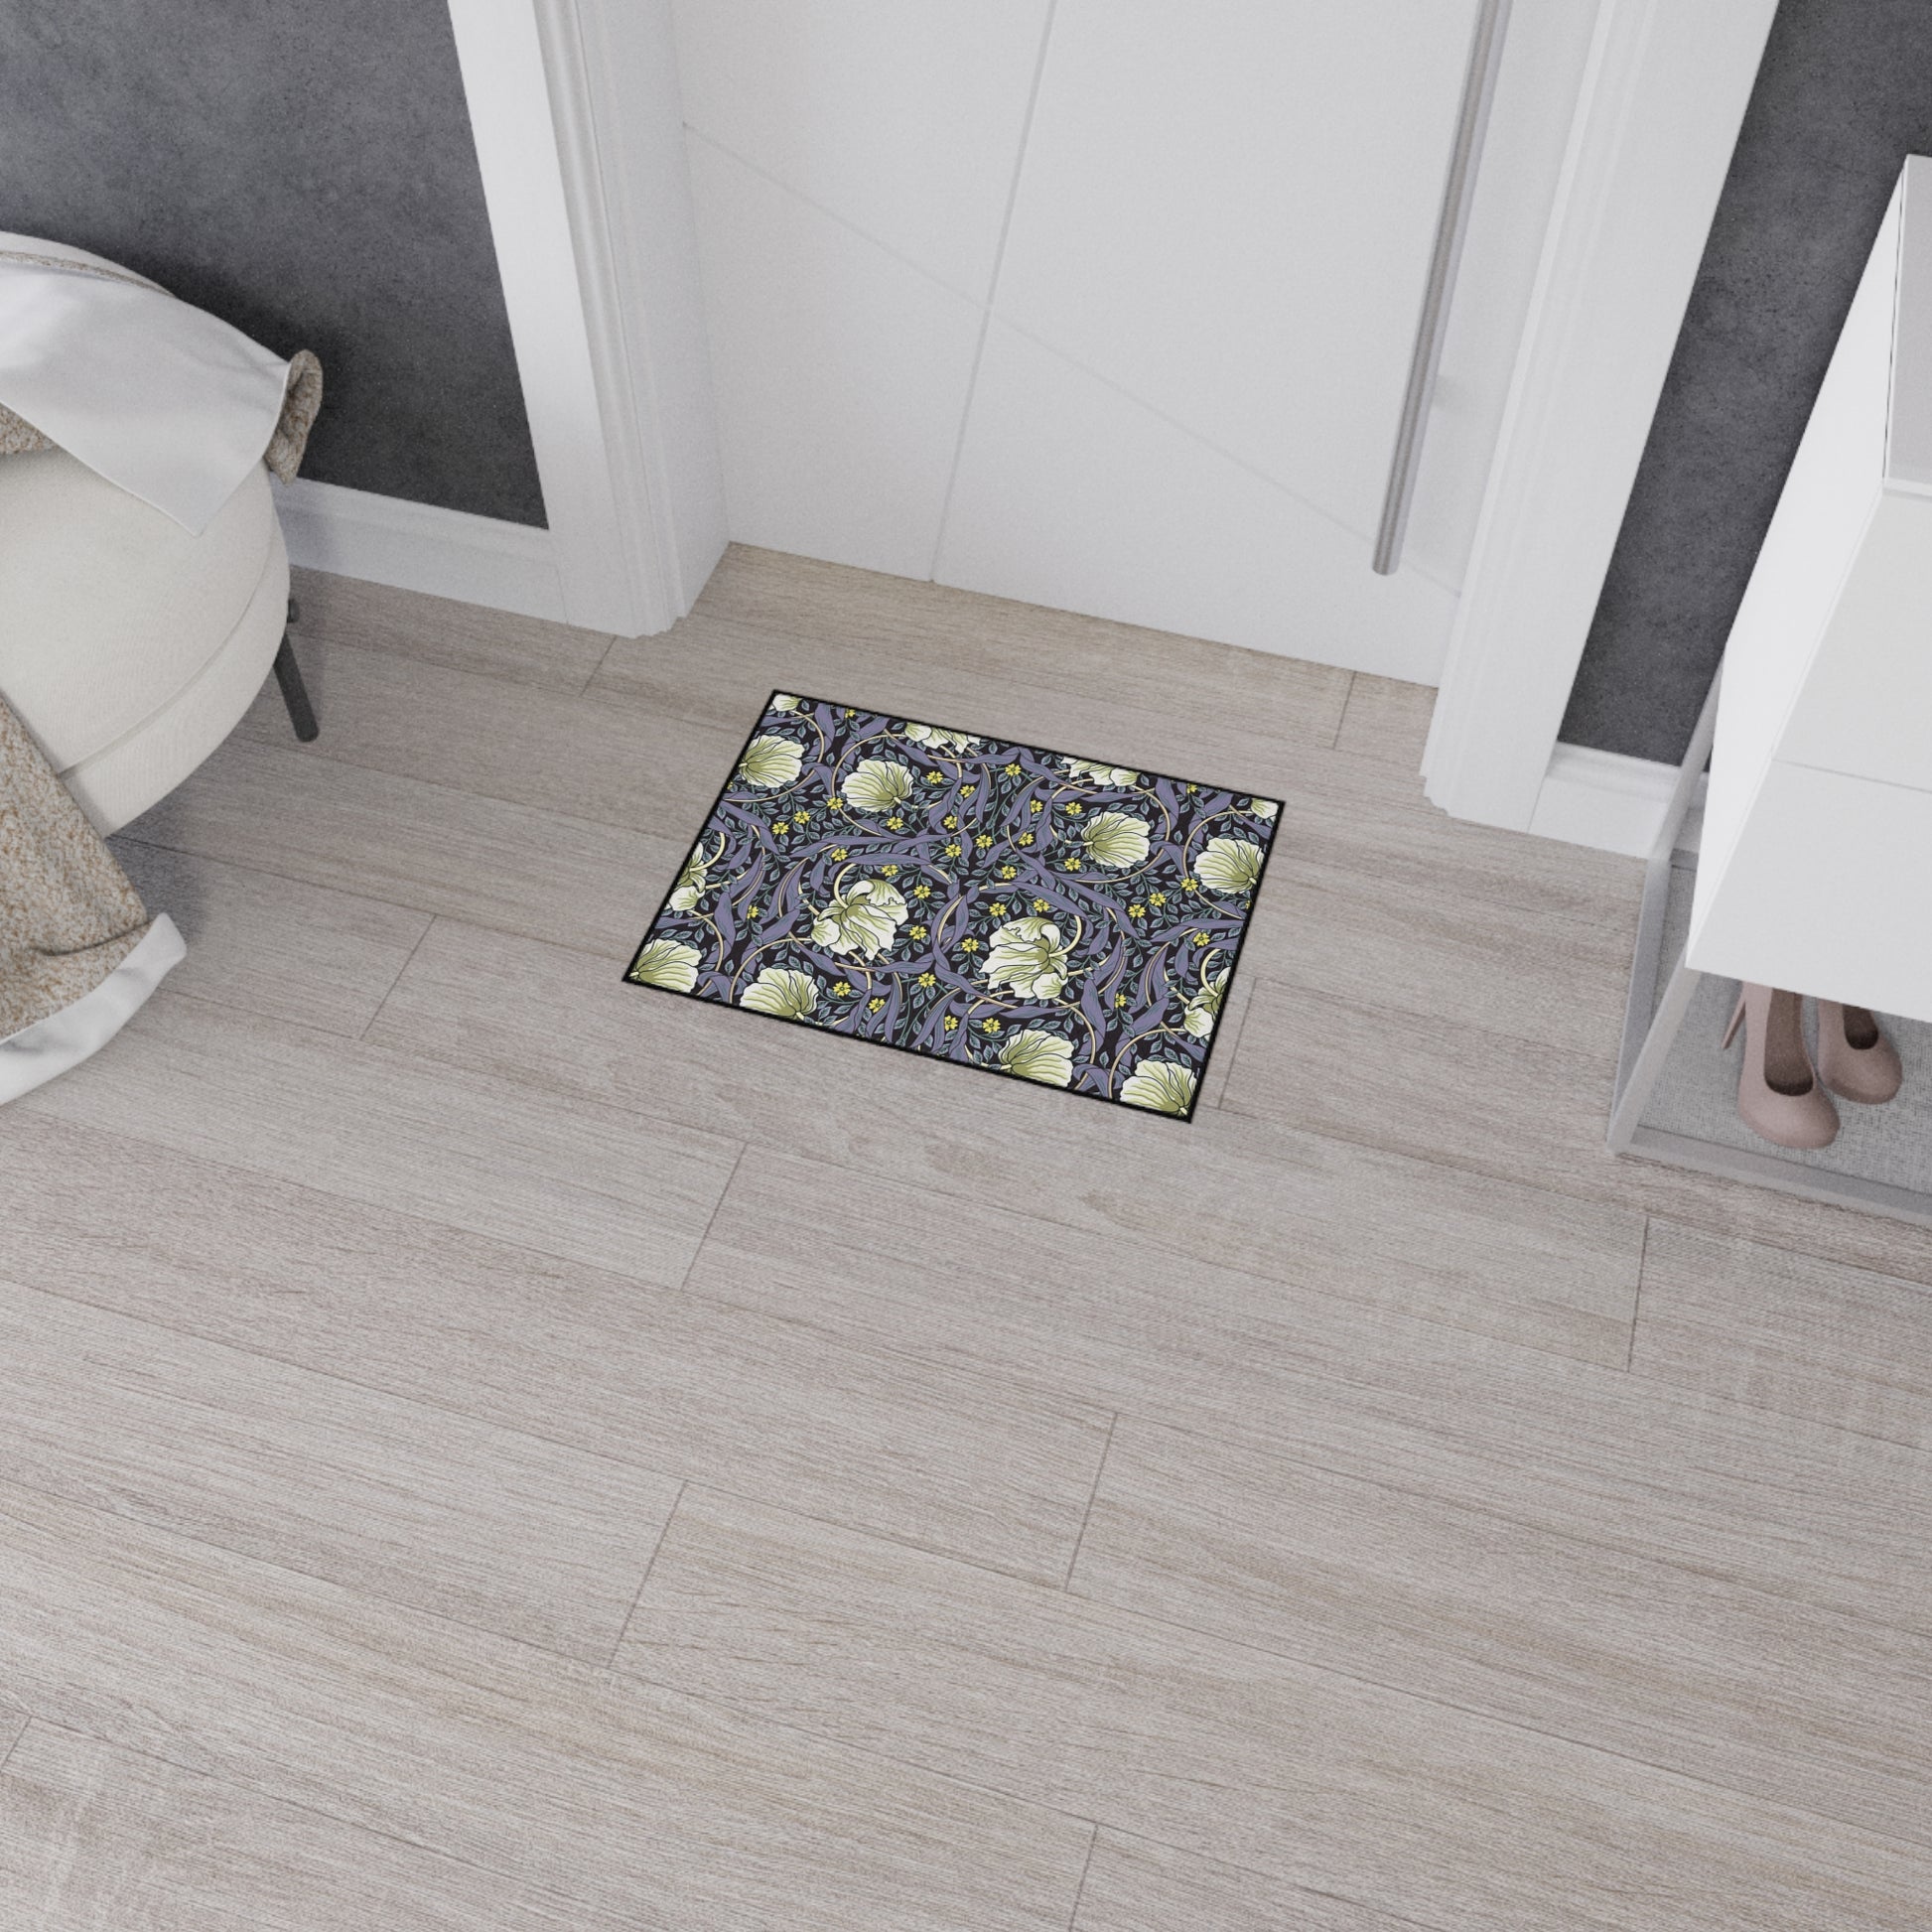 william-morris-co-heavy-duty-floor-mat-floor-mat-pimpernel-collection-lavender-21